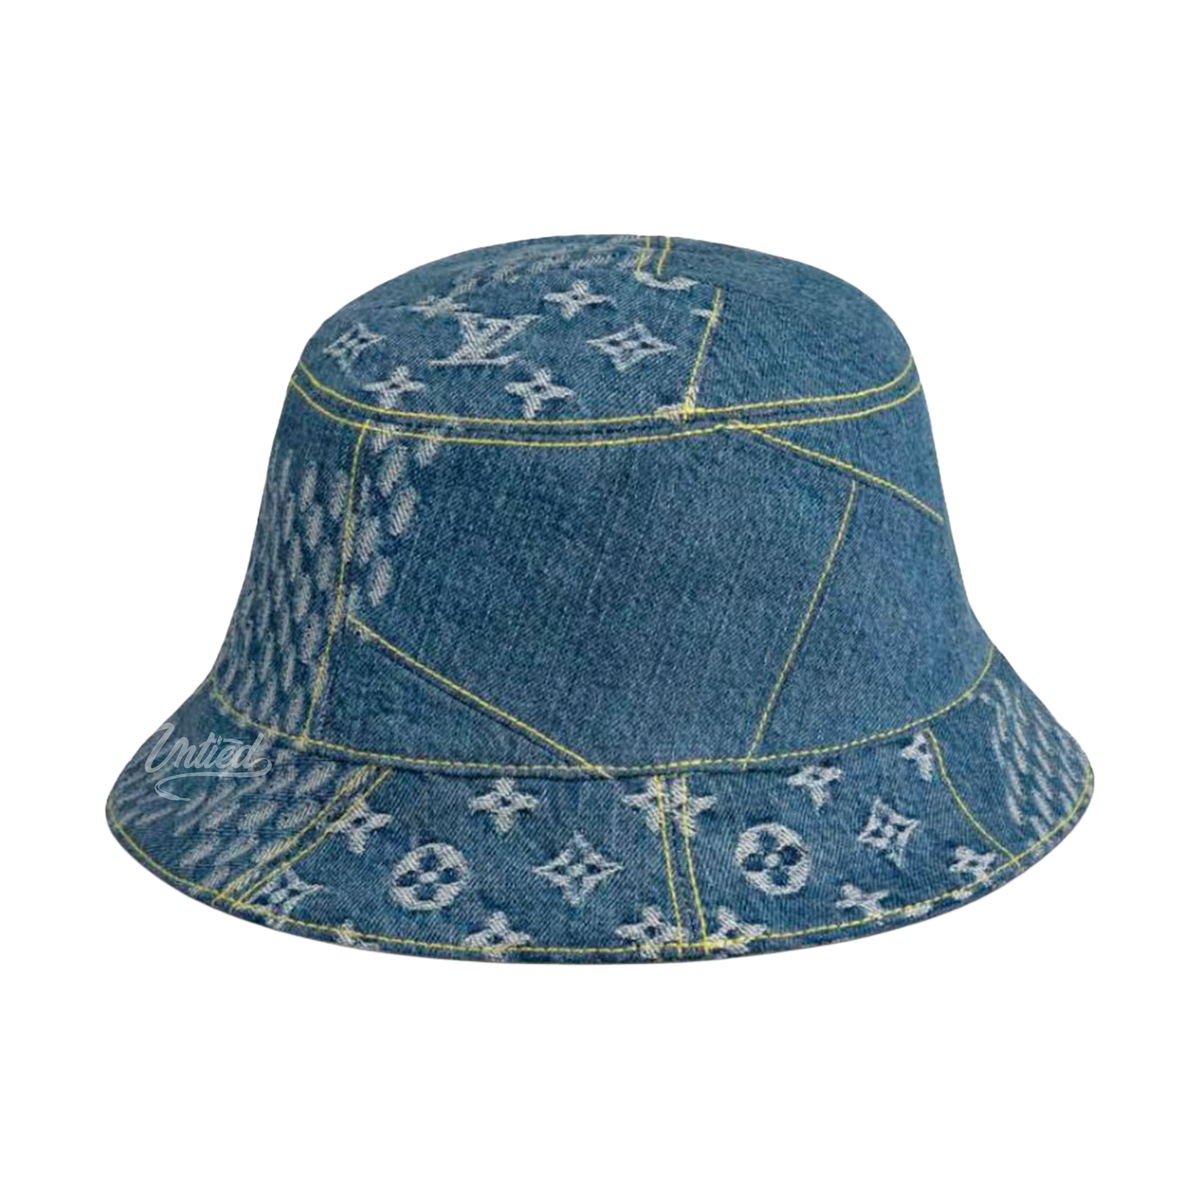 Louis Vuitton x Nigo Damier Bucket Hat "Bleu"